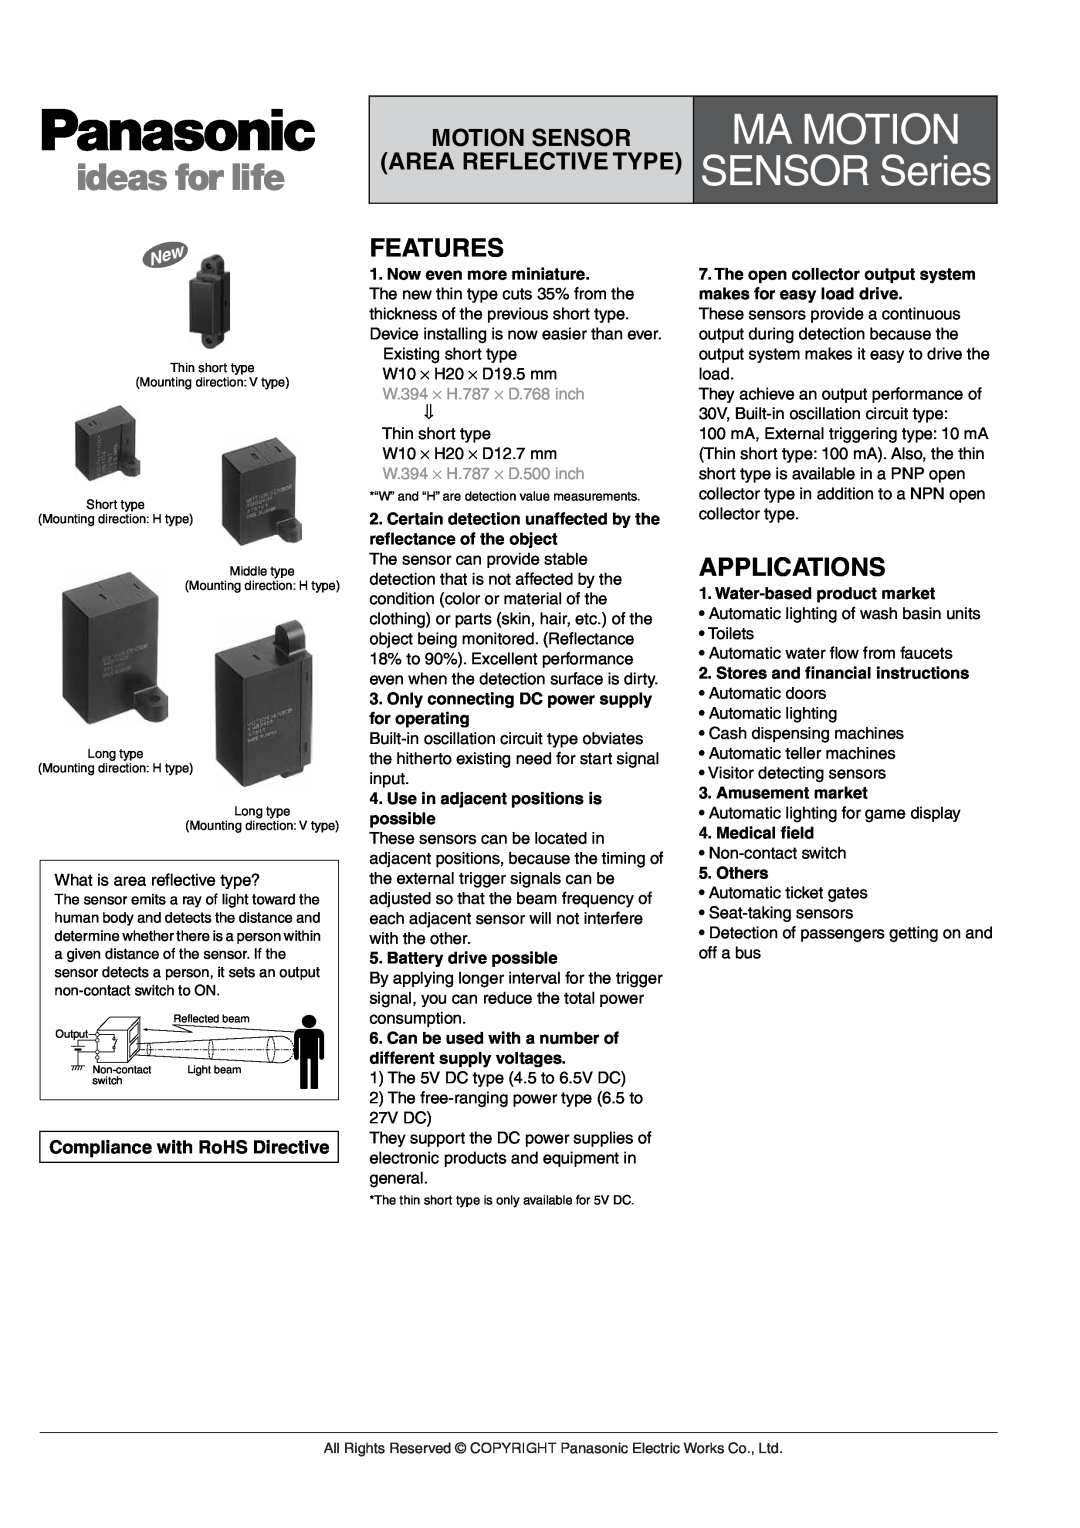 Panasonic Sensor Series manual MA Motion Sensor AMA1, AMB1, Features, Applications, Ma Motion, SENSOR Series 